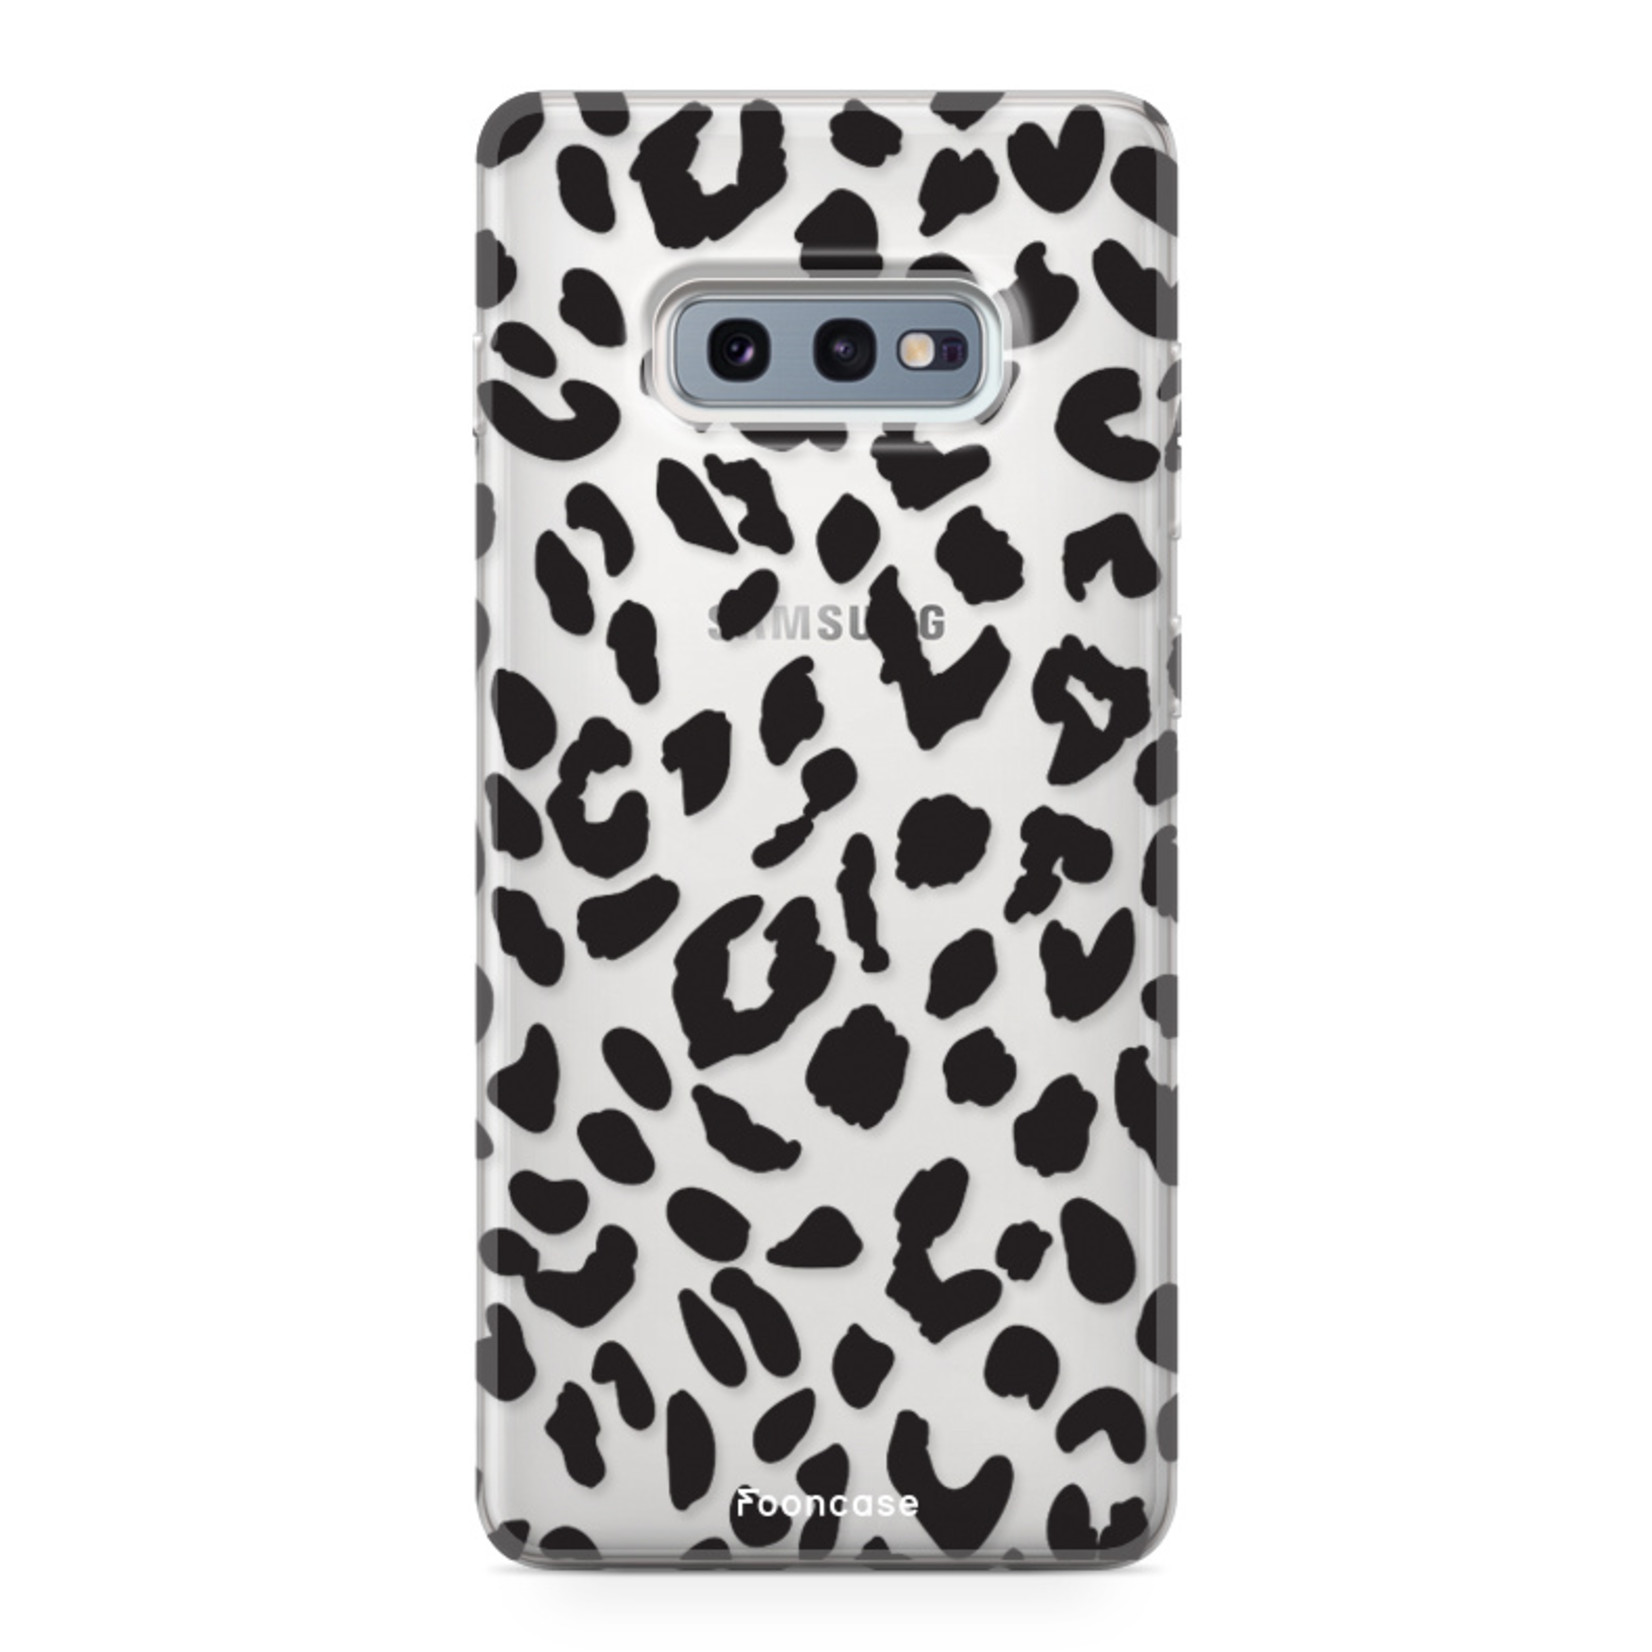 FOONCASE Samsung Galaxy S10e hoesje TPU Soft Case - Back Cover - Luipaard / Leopard print